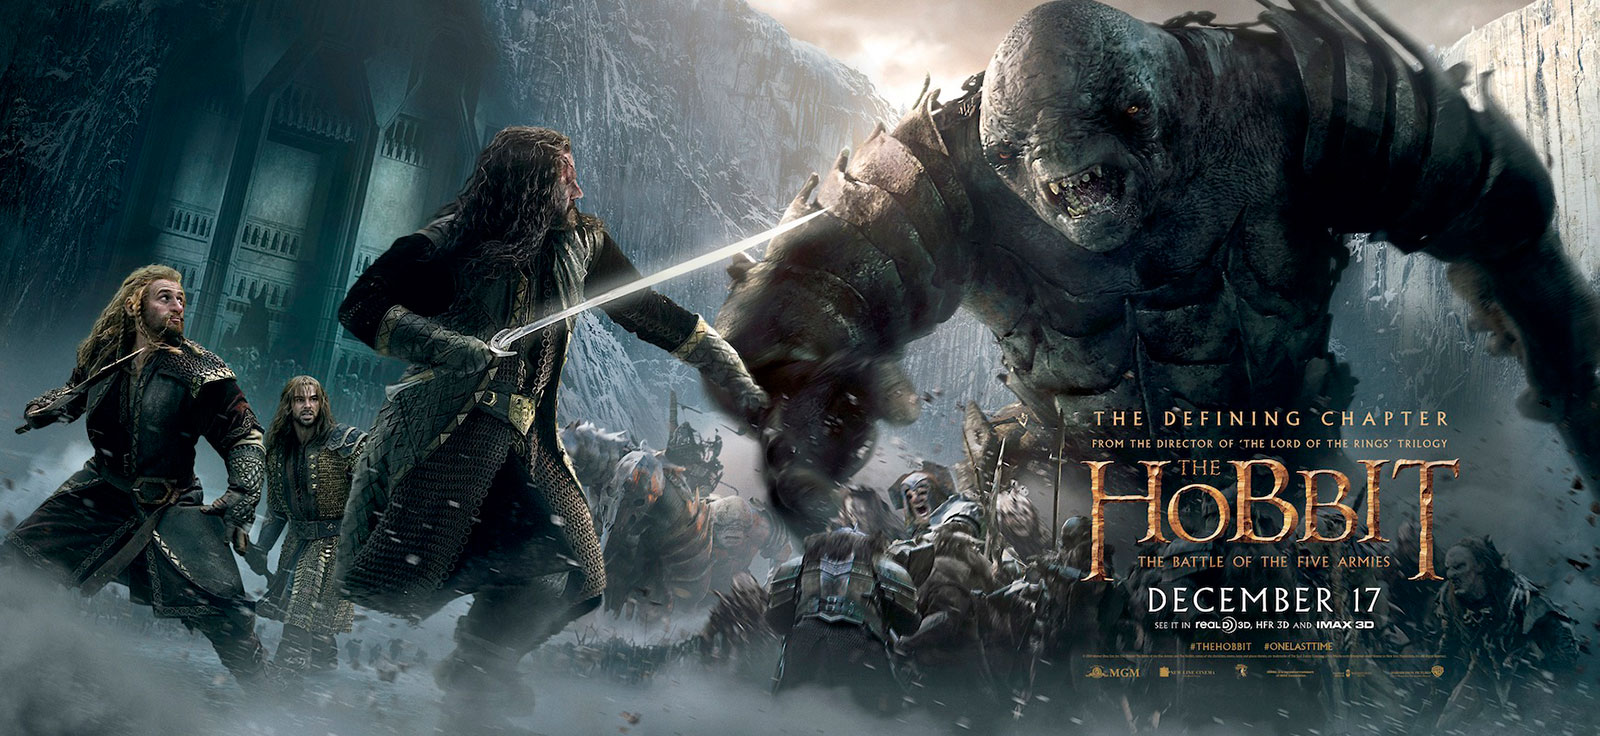 The Hobbit 3 The Battle of the Five Armies 2014 Movie Smaug Desktop 1600x736